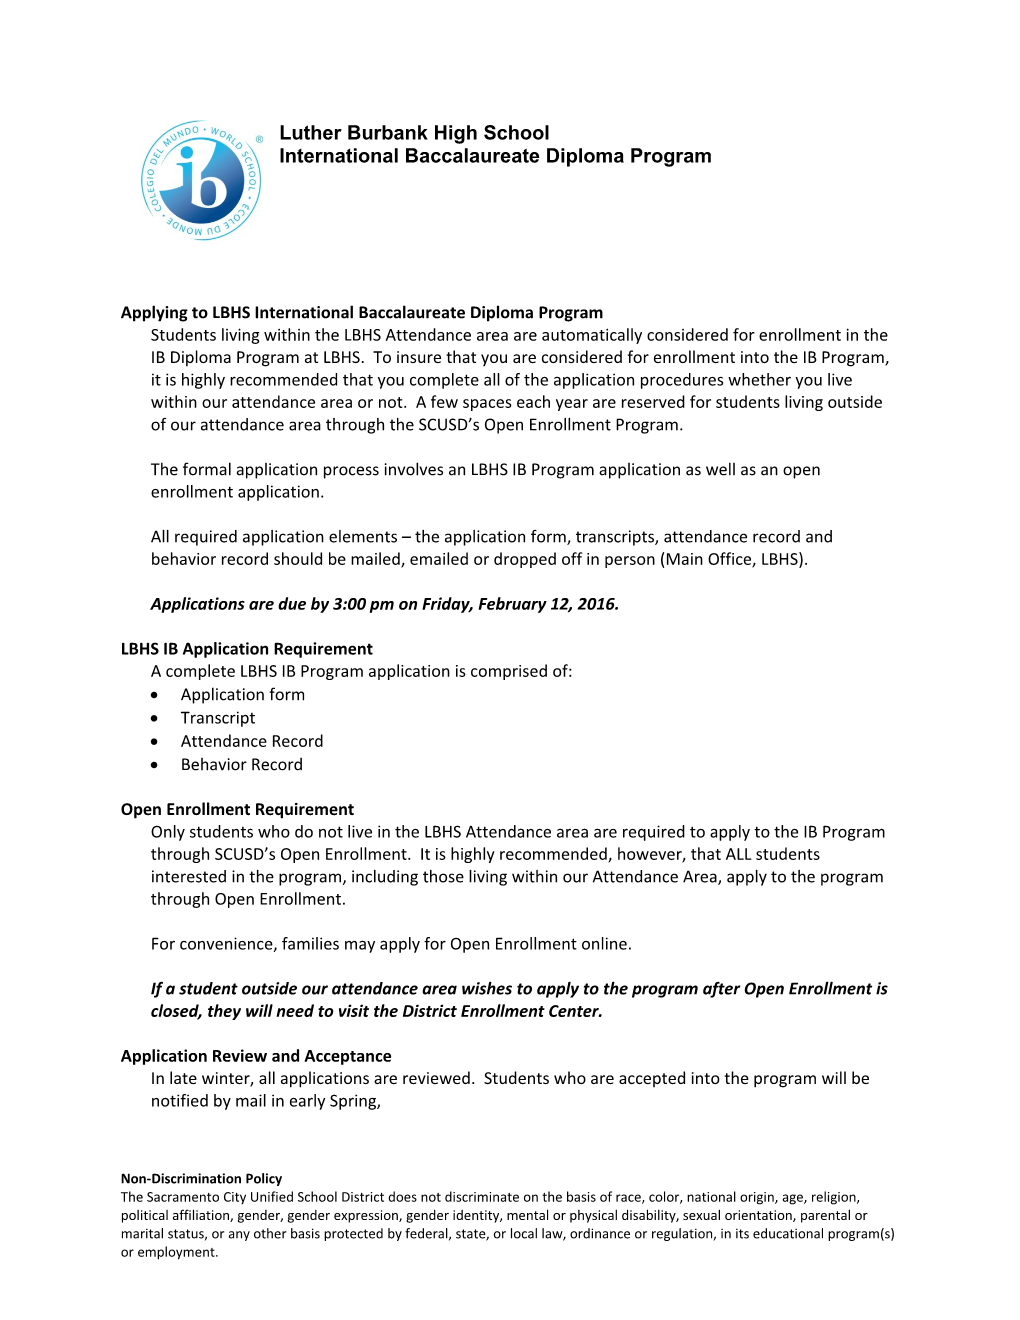 International Baccalaureate Diploma Program s1